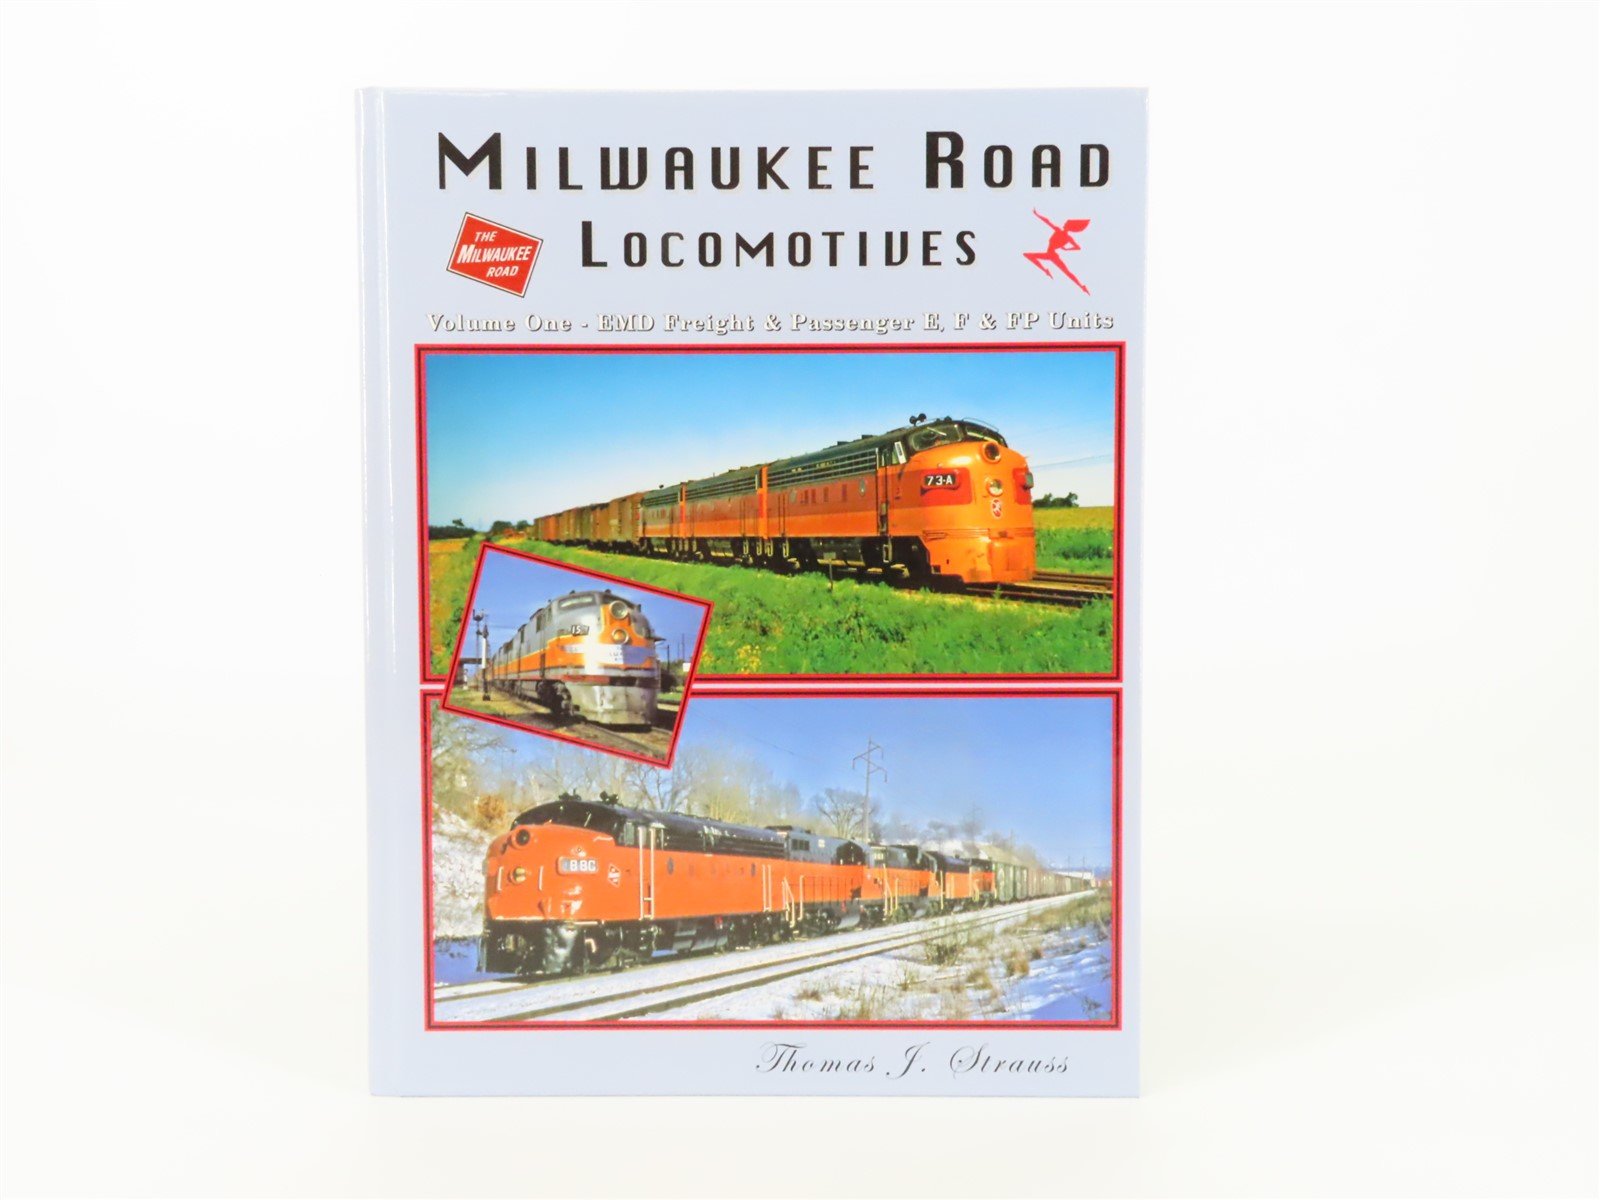 Milwaukee Road Locomotives Volume One by Thomas J. Strauss ©2006 HC Book